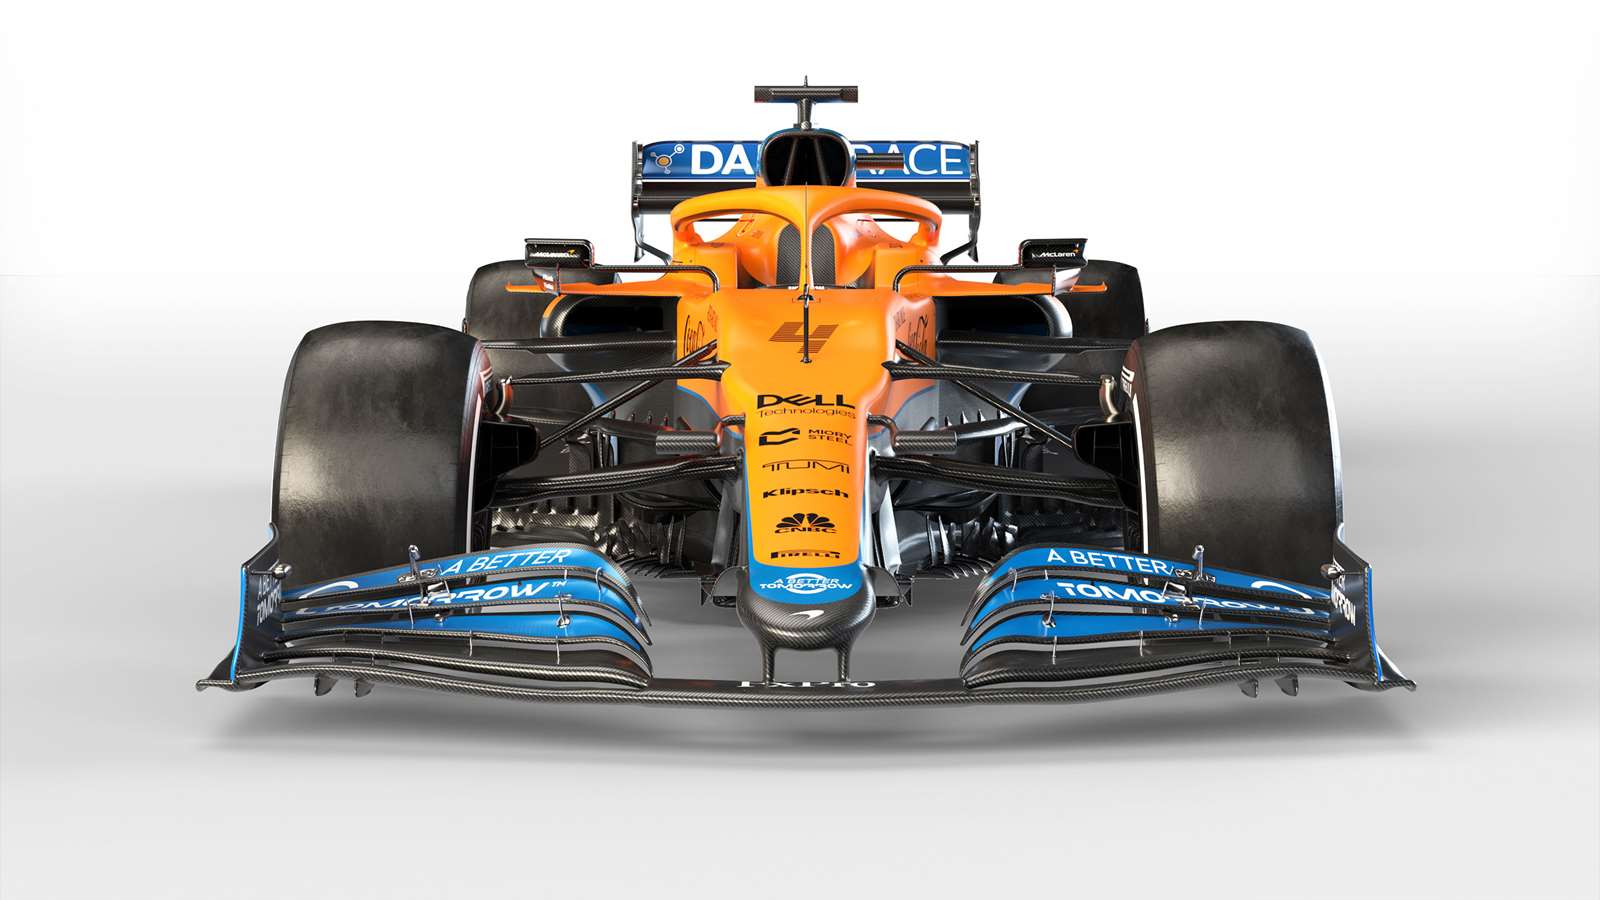 Gallery: The McLaren MCL35M 2021 F1 car